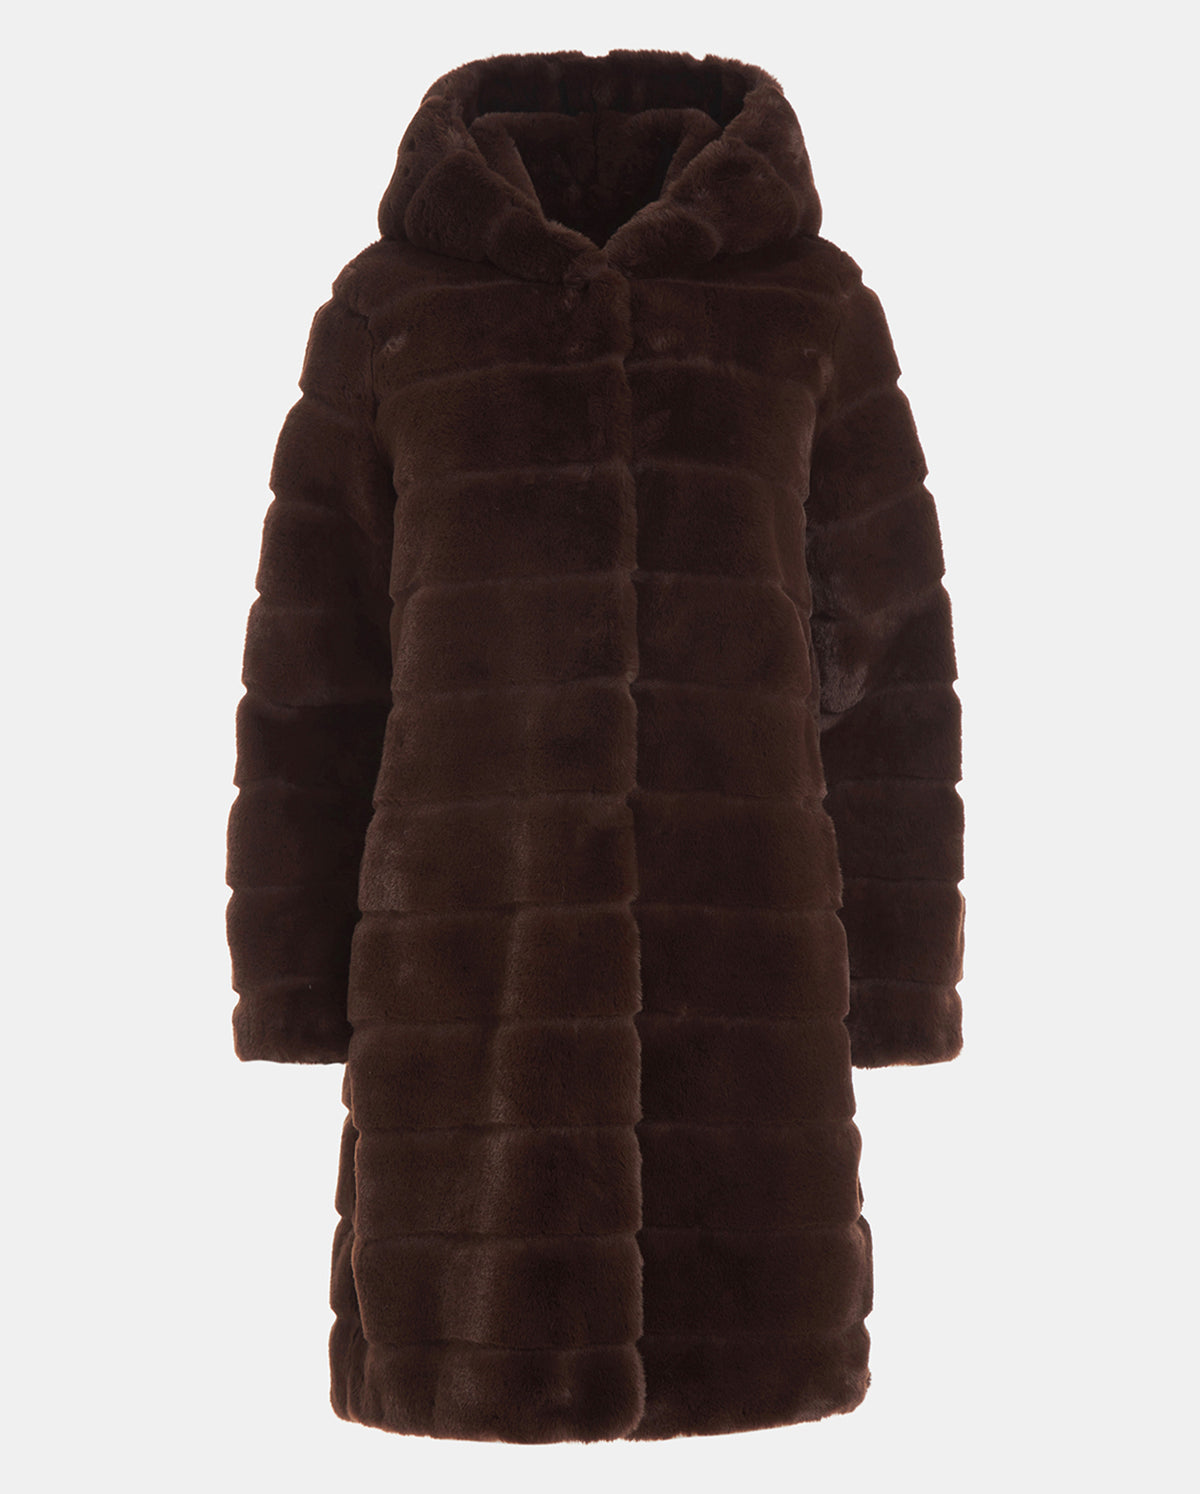 Celina 3 Hooded Faux Fur Coat